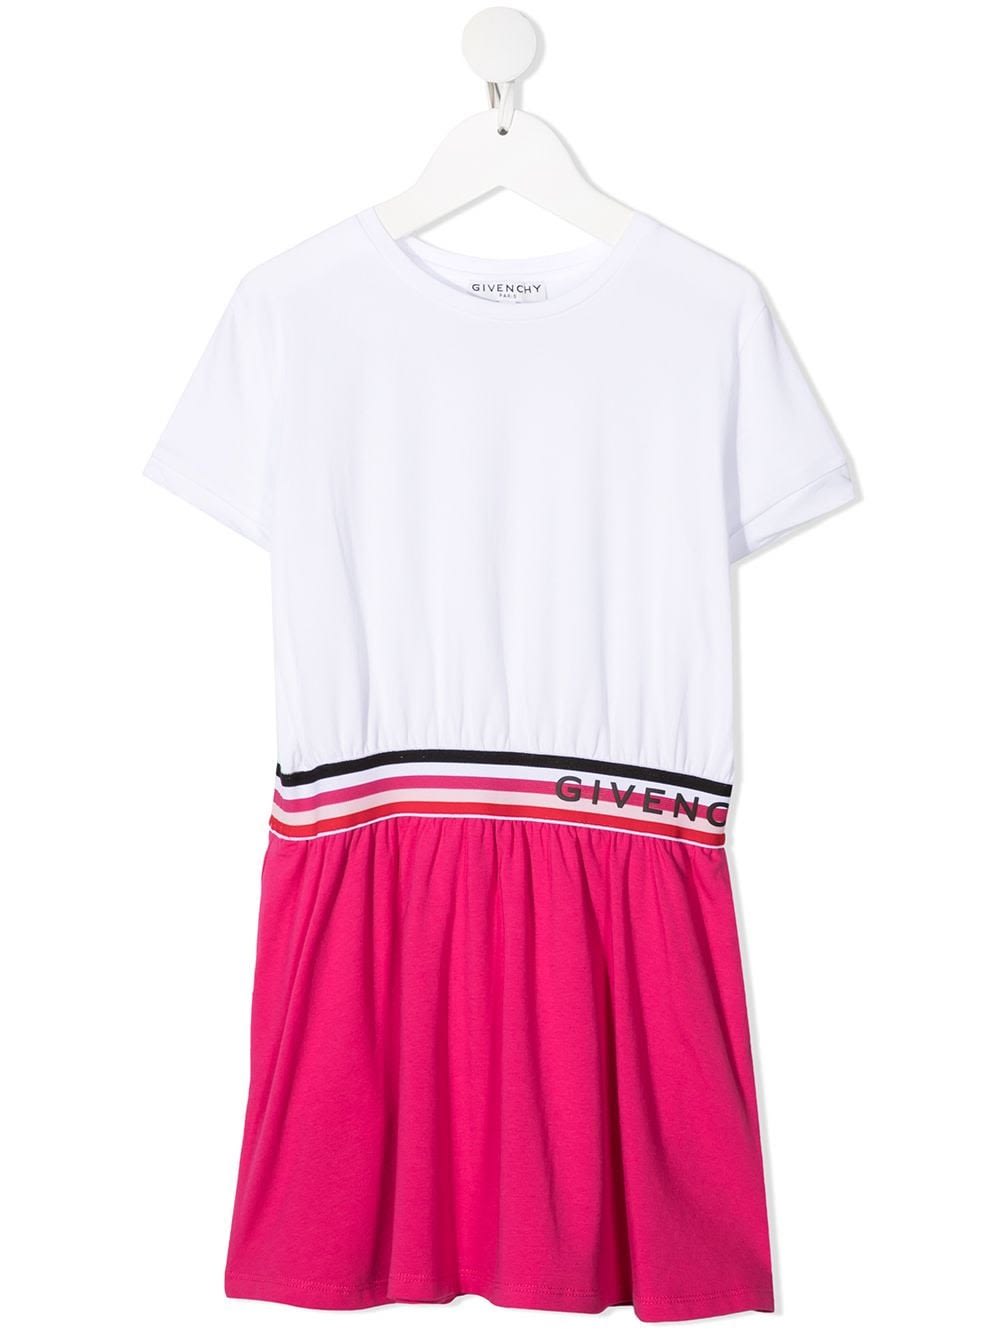 Givenchy Color Block Jersey T-shirt Dress